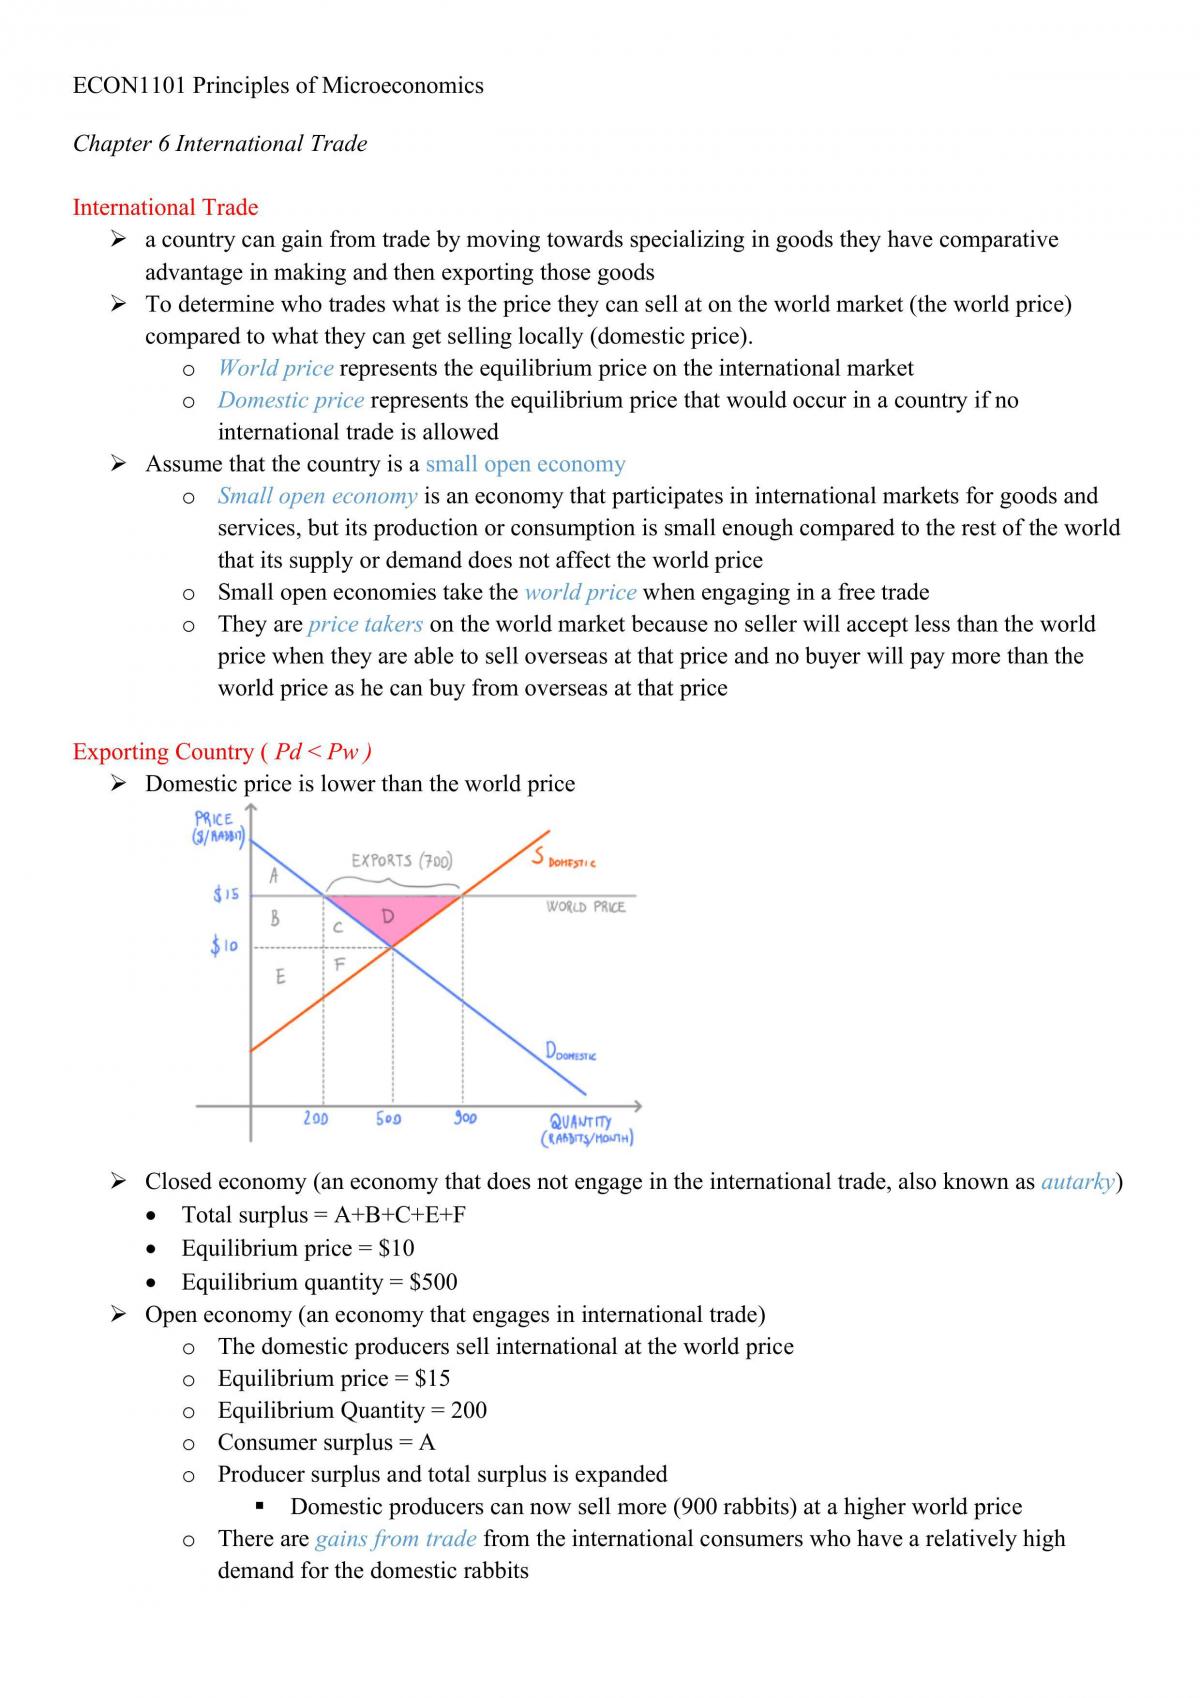 microeconomics chapter 1 homework quizlet